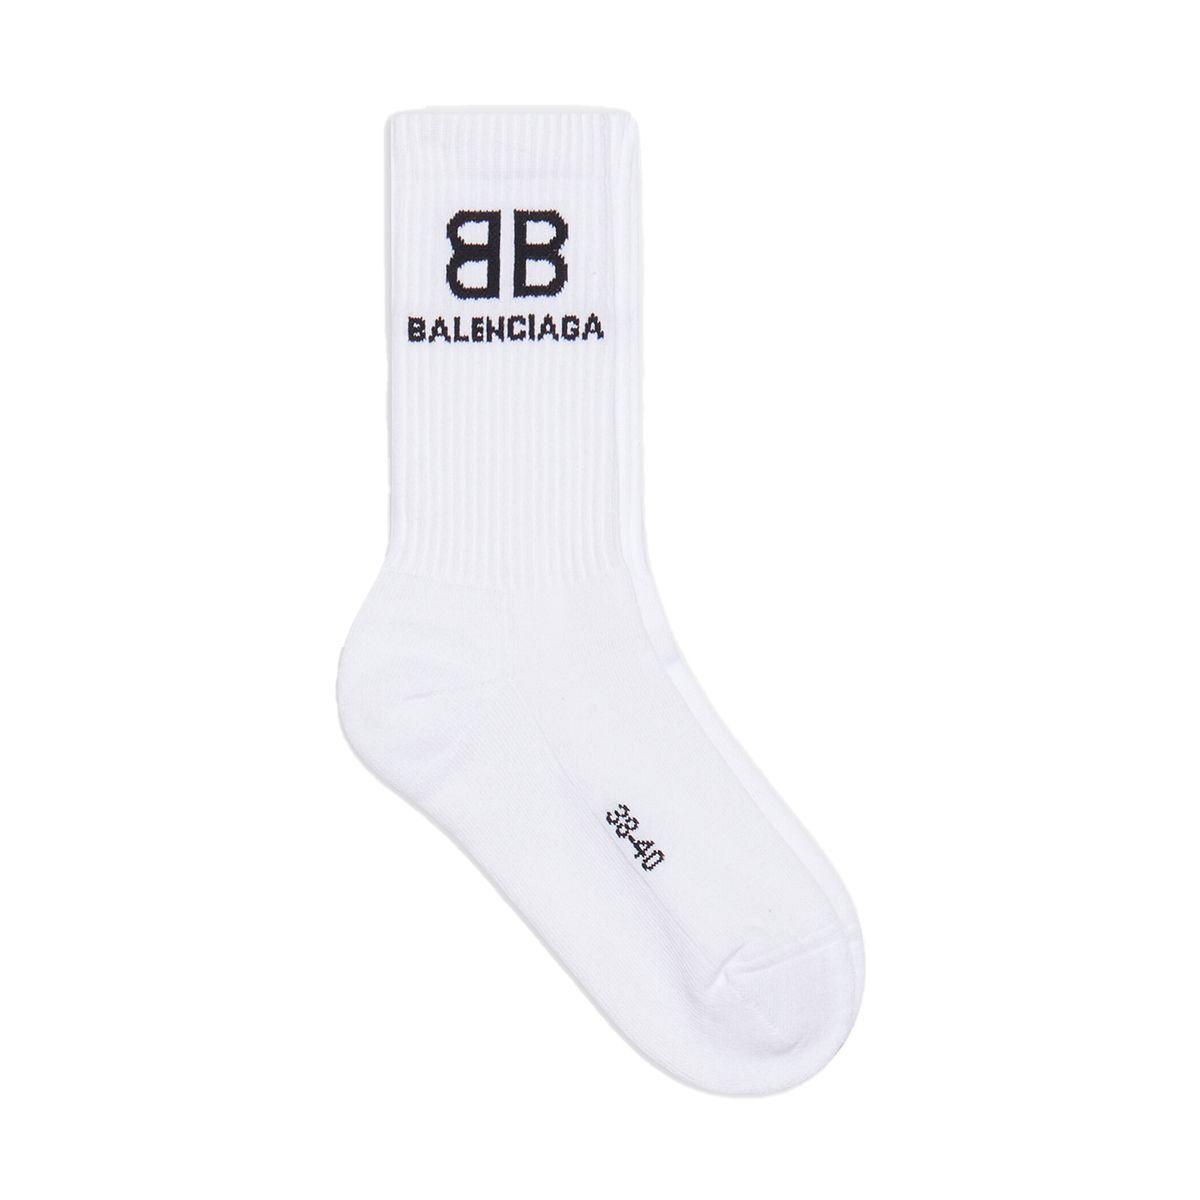 Tennis Socks In White